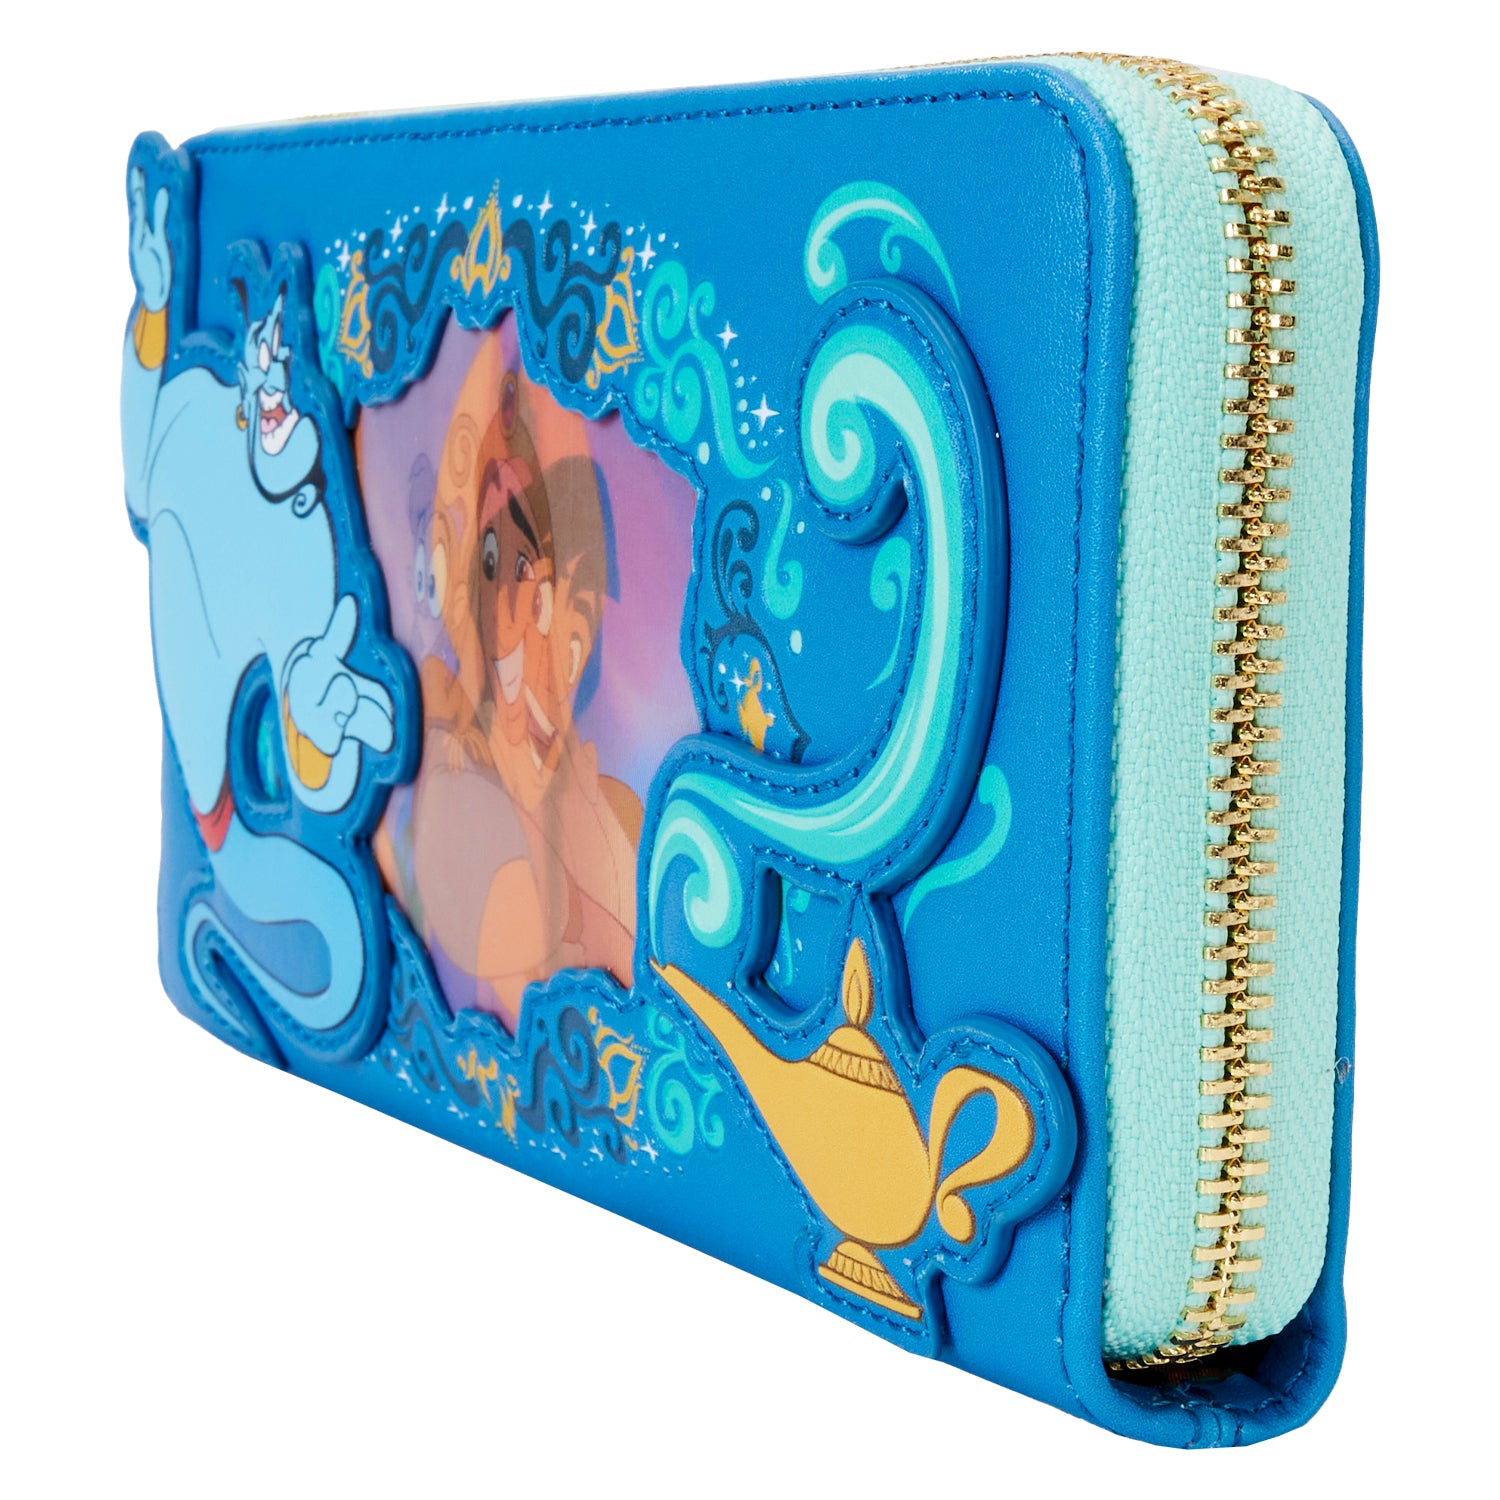 Loungefly Disney Aladdin Princess Jasmine Lenticular Wristlet Wallet